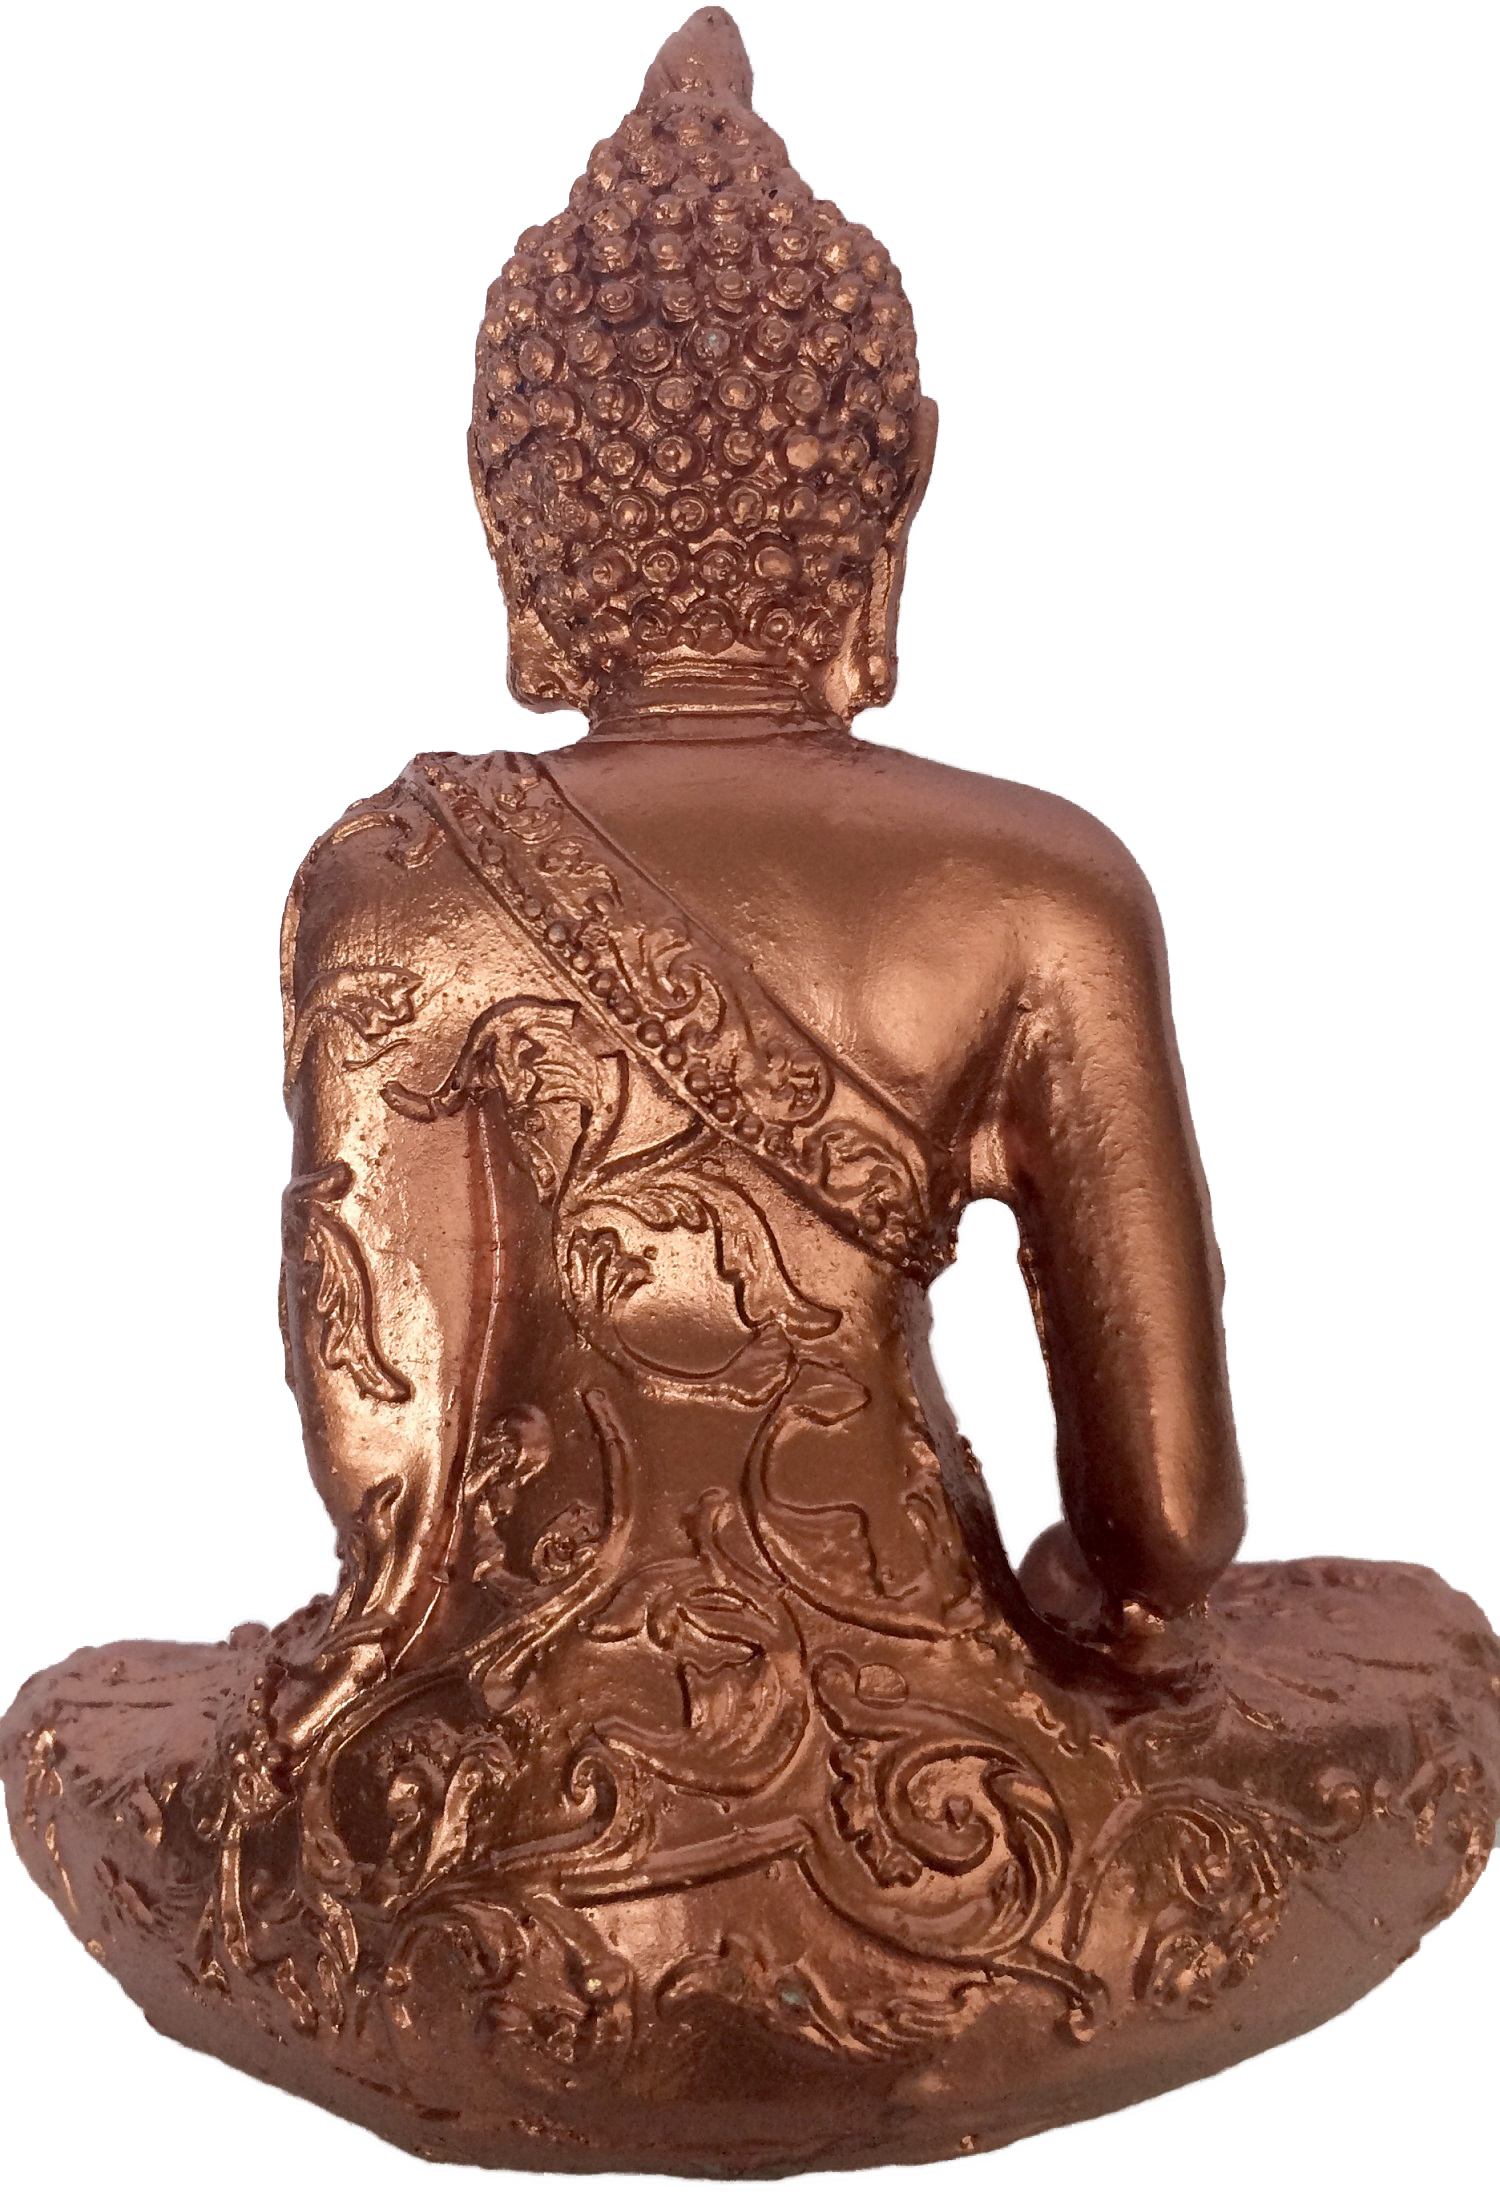 bouddha-thai-cuivre-pei-17781-bouddhathaicuivre-1496653690